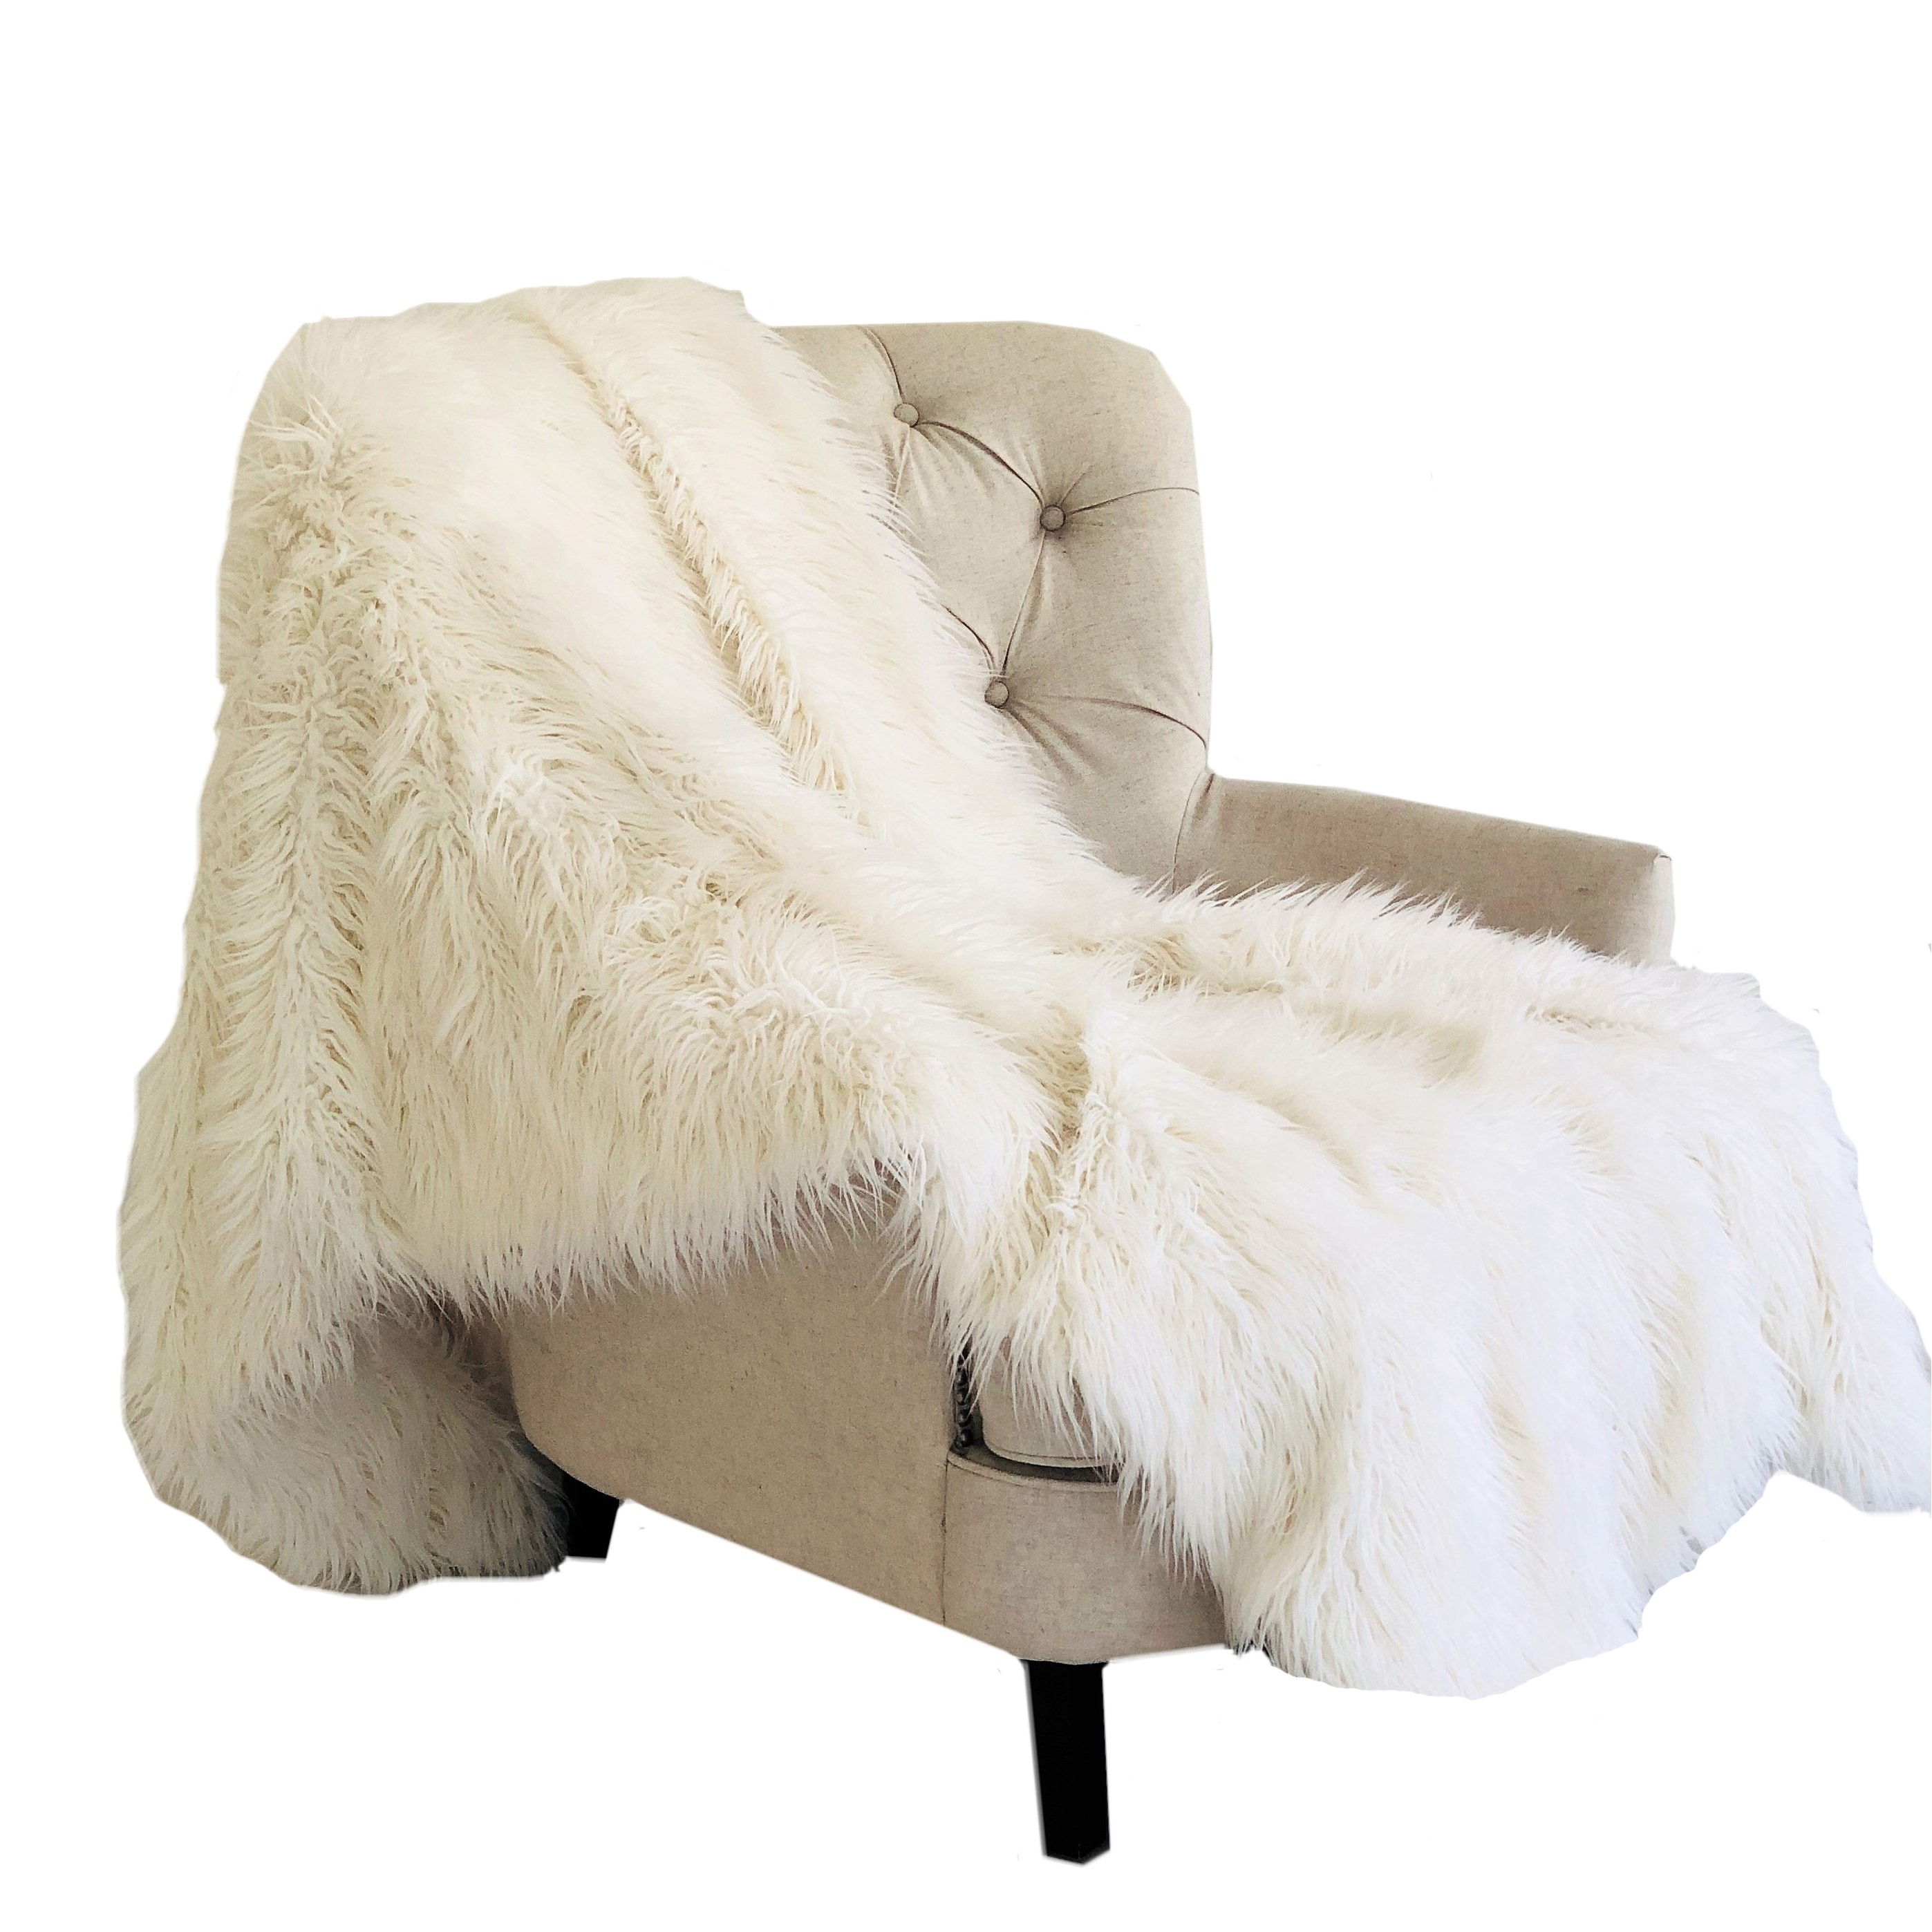 Plutus Off White Mongolian Faux Fur Luxury Throw On Sale Overstock 27345297